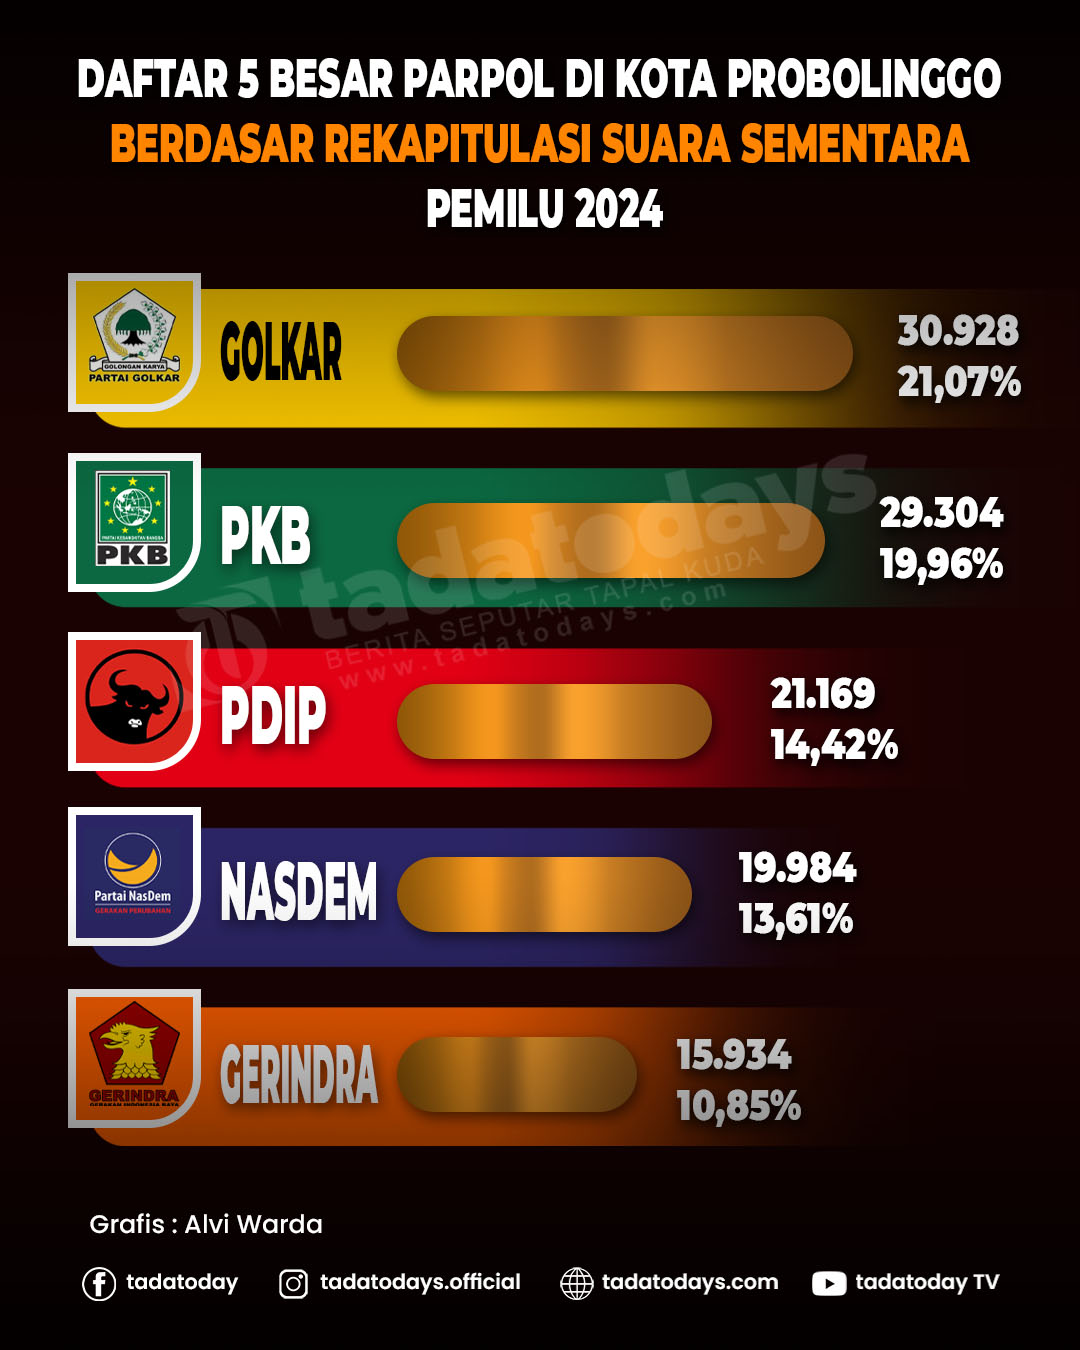 Ini Daftar 5 Besar Parpol di Kota Probolinggo Berdasar Rekapitulasi Suara Sementara Pemilu 2024